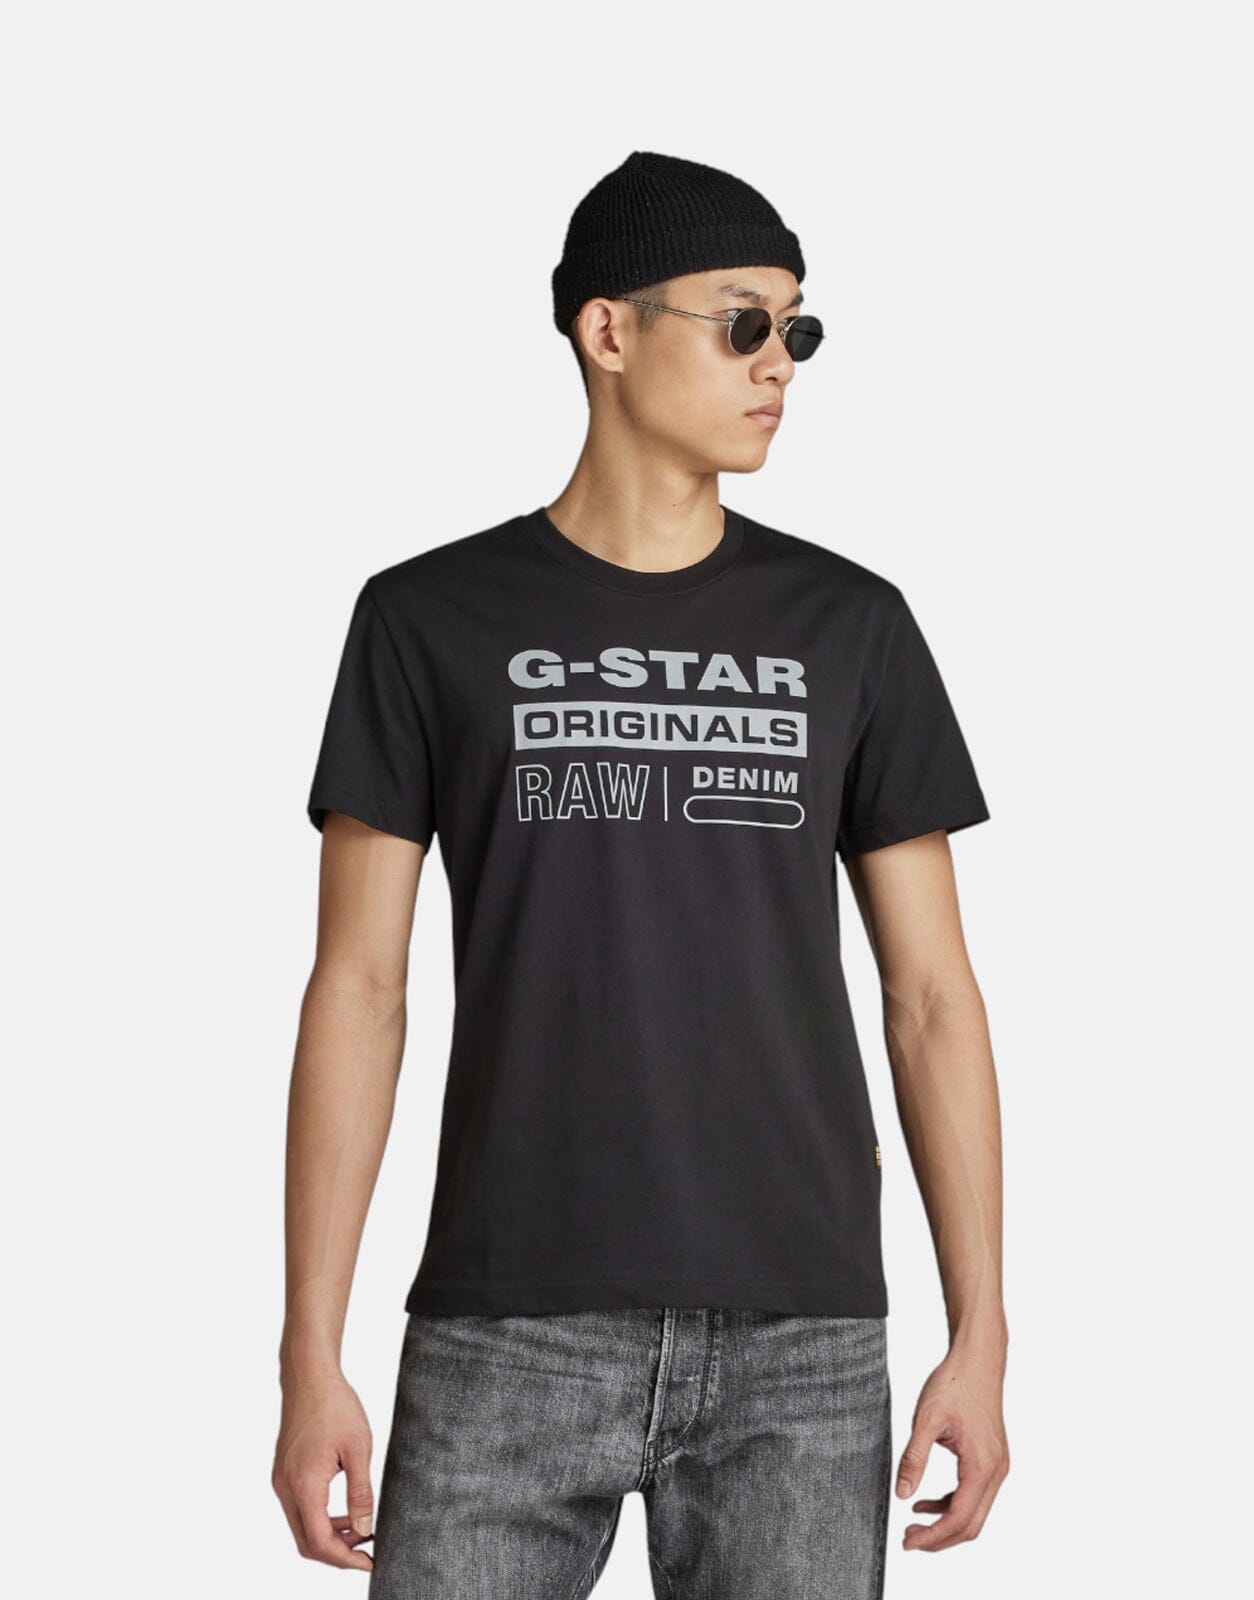 G-Star RAW Reflective Originals T-Shirt Dk Black - Subwear